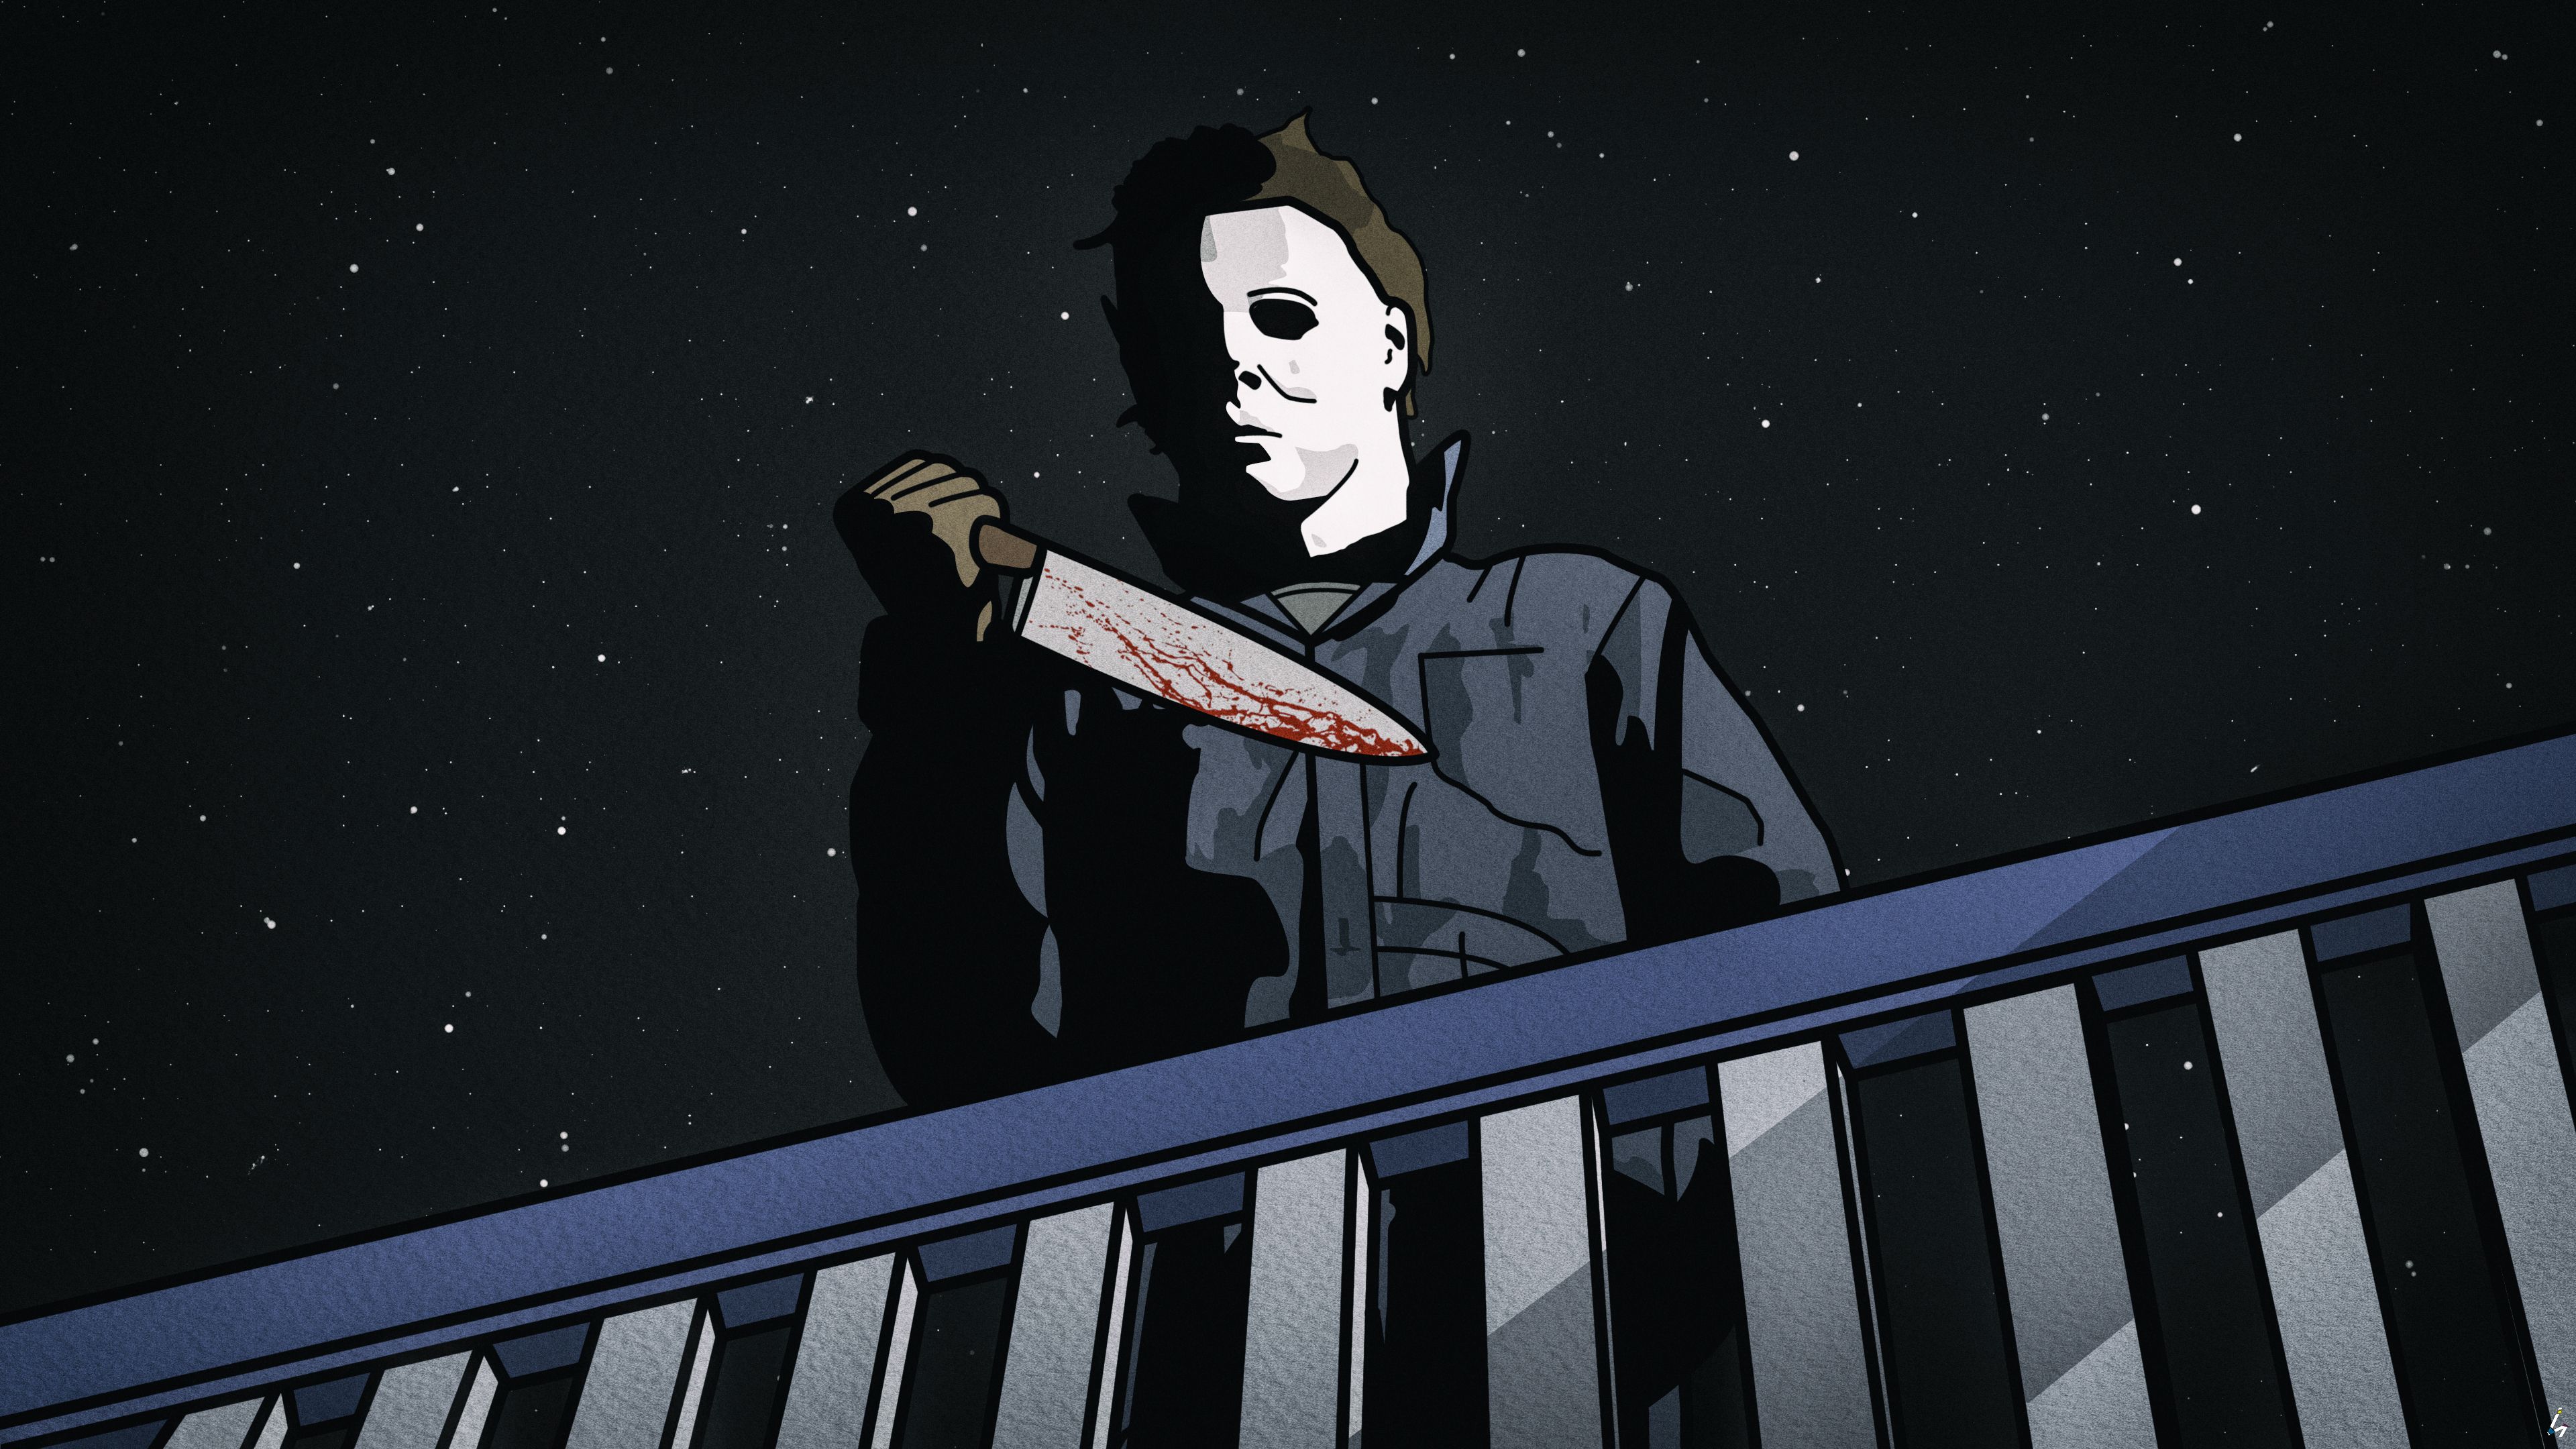 Michael Myers, Halloween, Horror, Fan Art, Digital Art, Blood, Knife, Low Angle, Starred Sky, Night, Railingx2160 Wallpaper